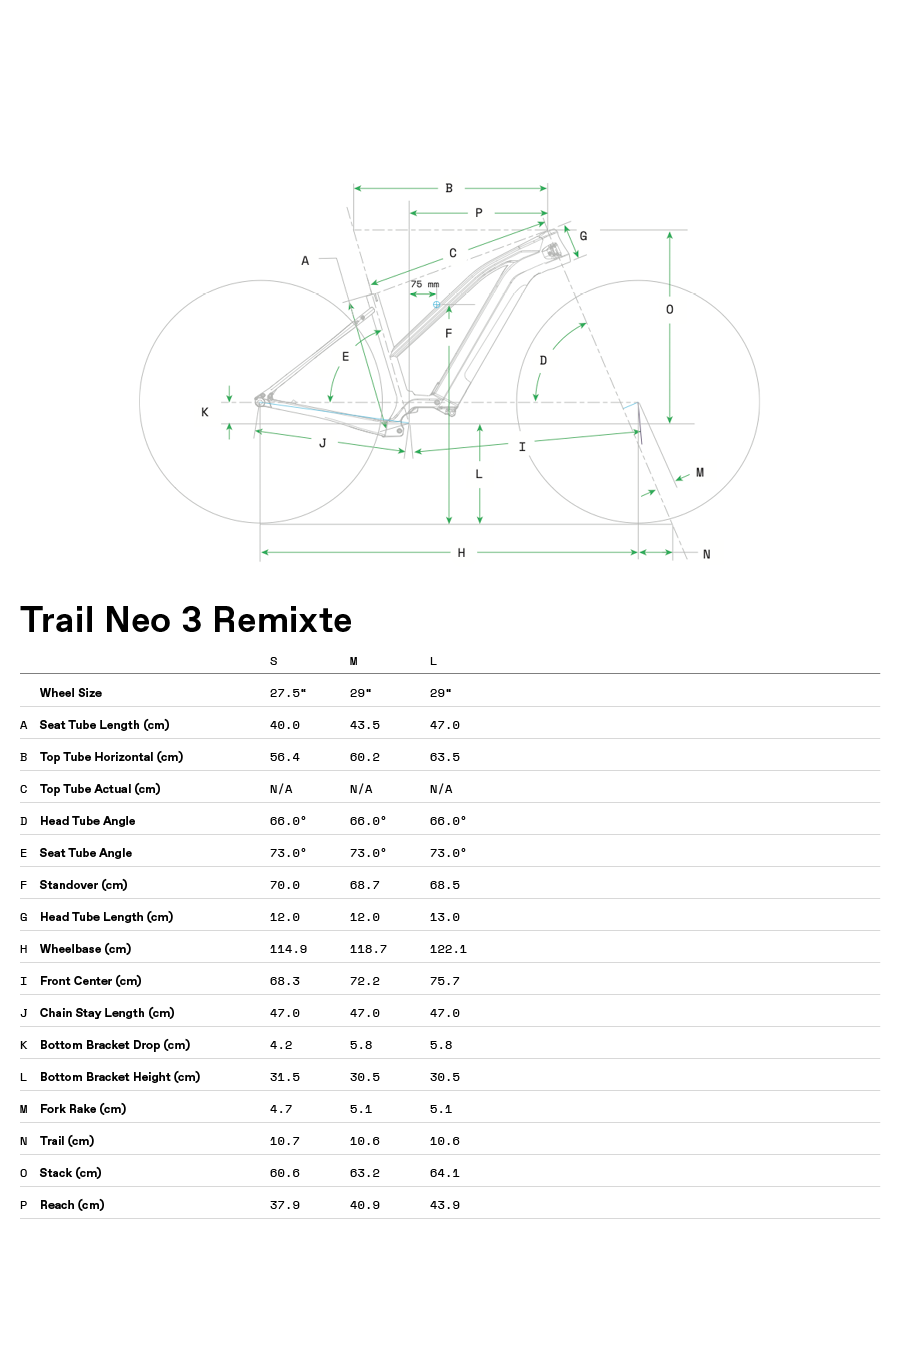 Geometrie Trail Neo Remixte